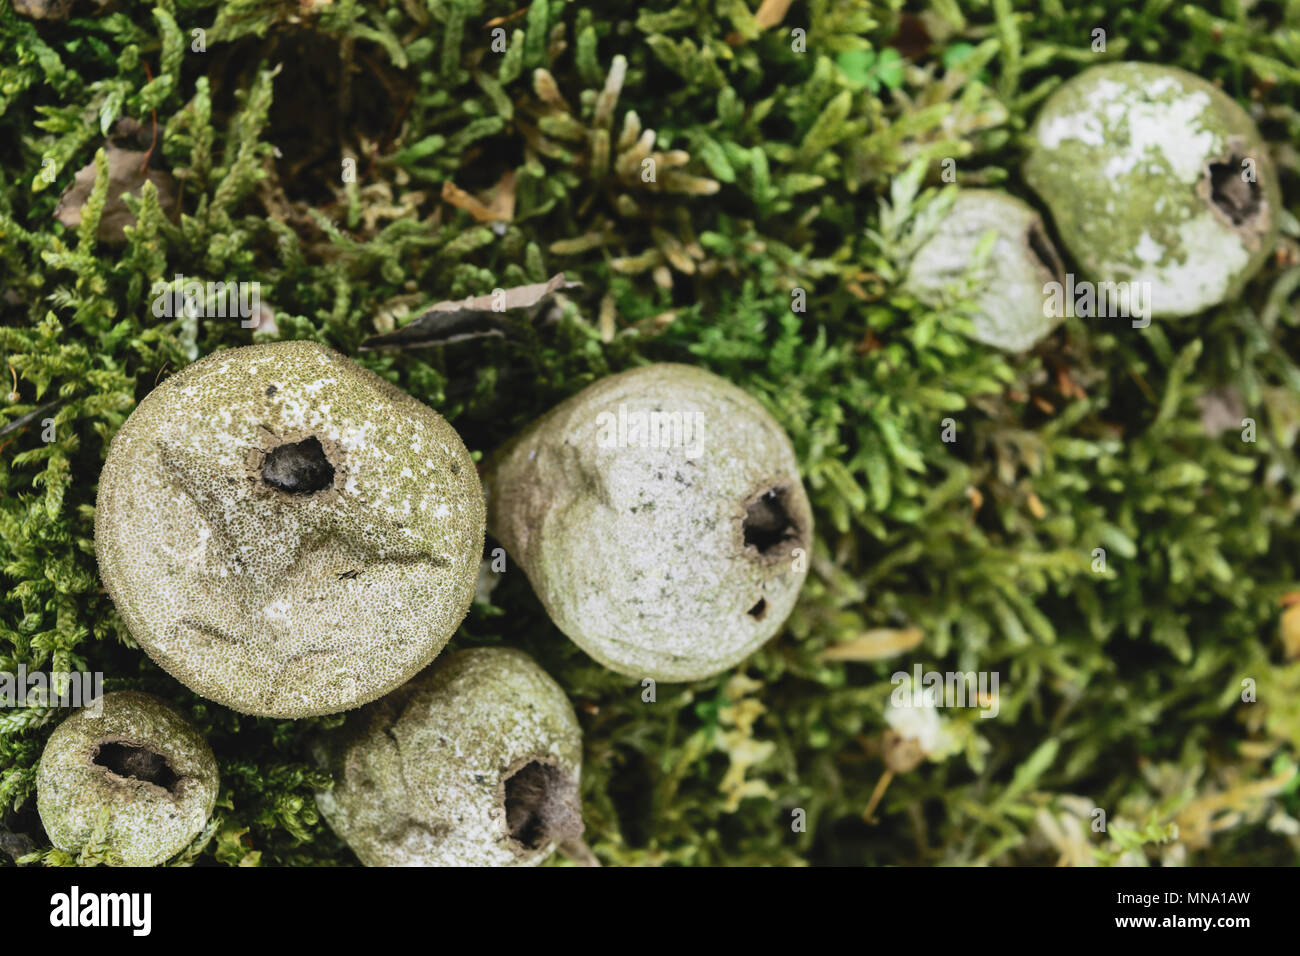 Puffball fungus mushrooms on green moss background. Biggest mushroom is in focus Stock Photo